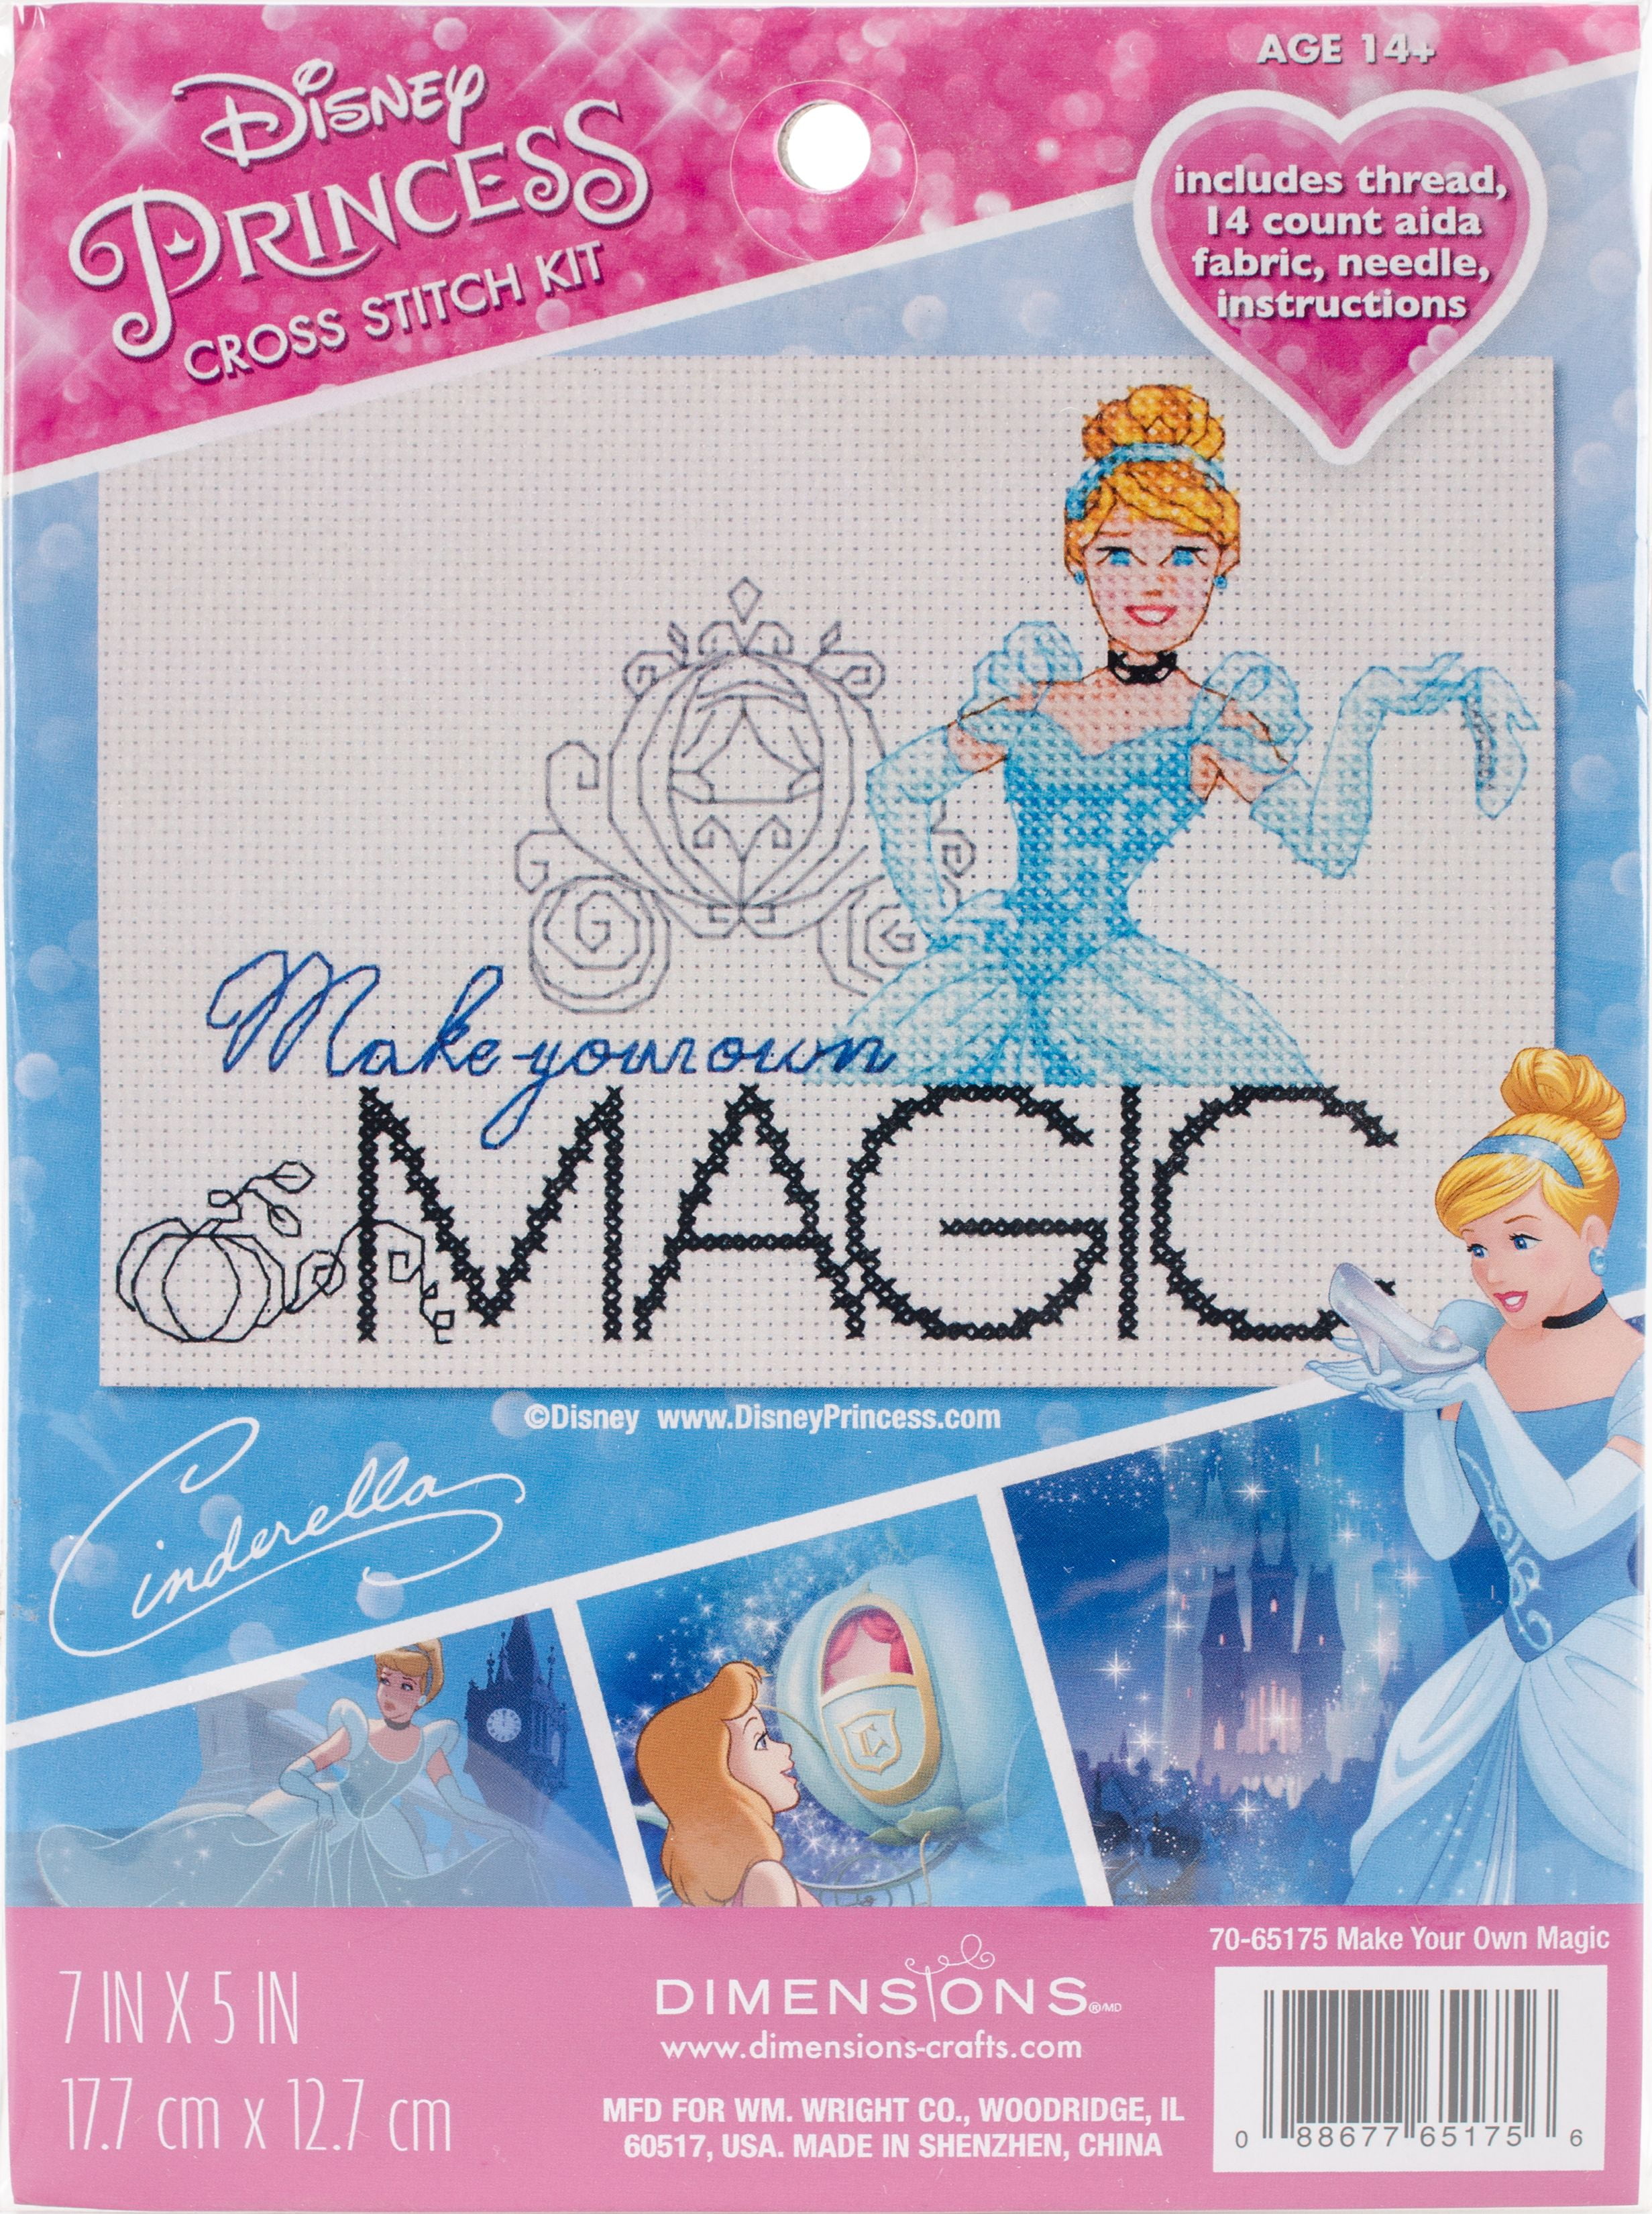 Disney Princess Embroidery Thread Kit